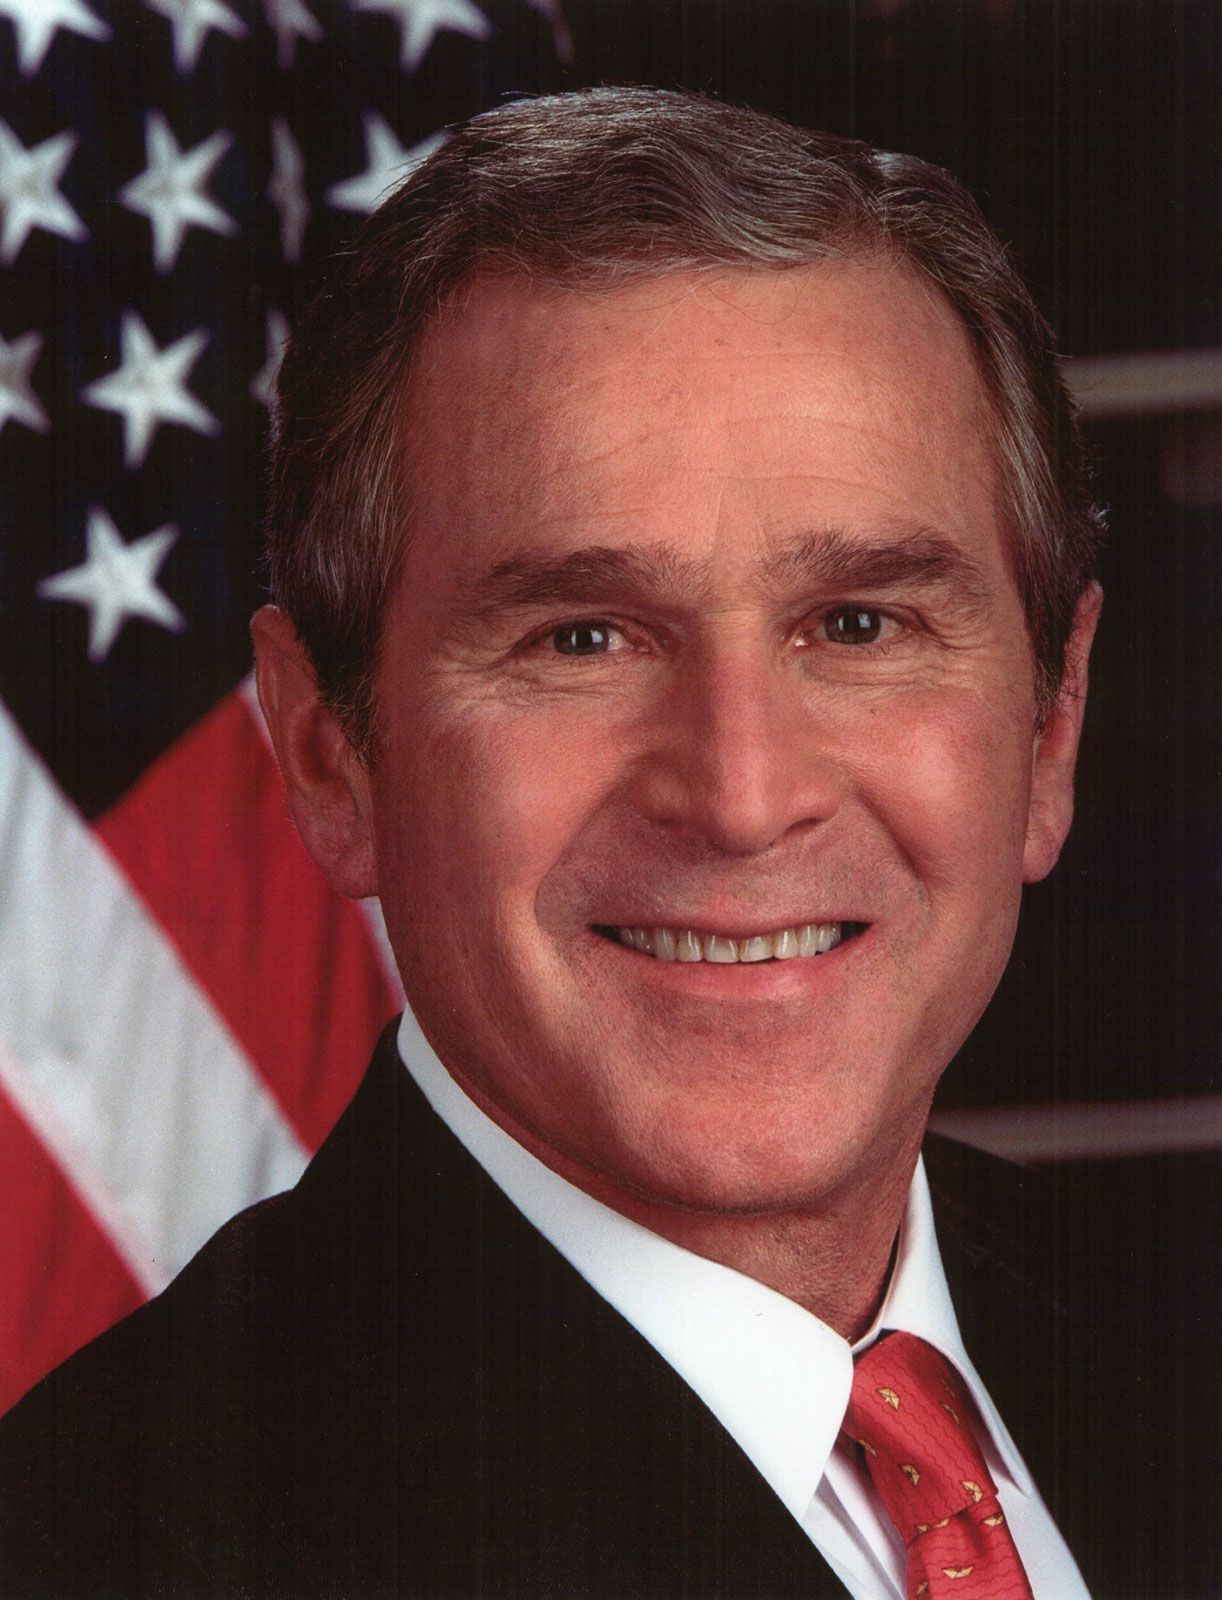 George Bush alive and kicking